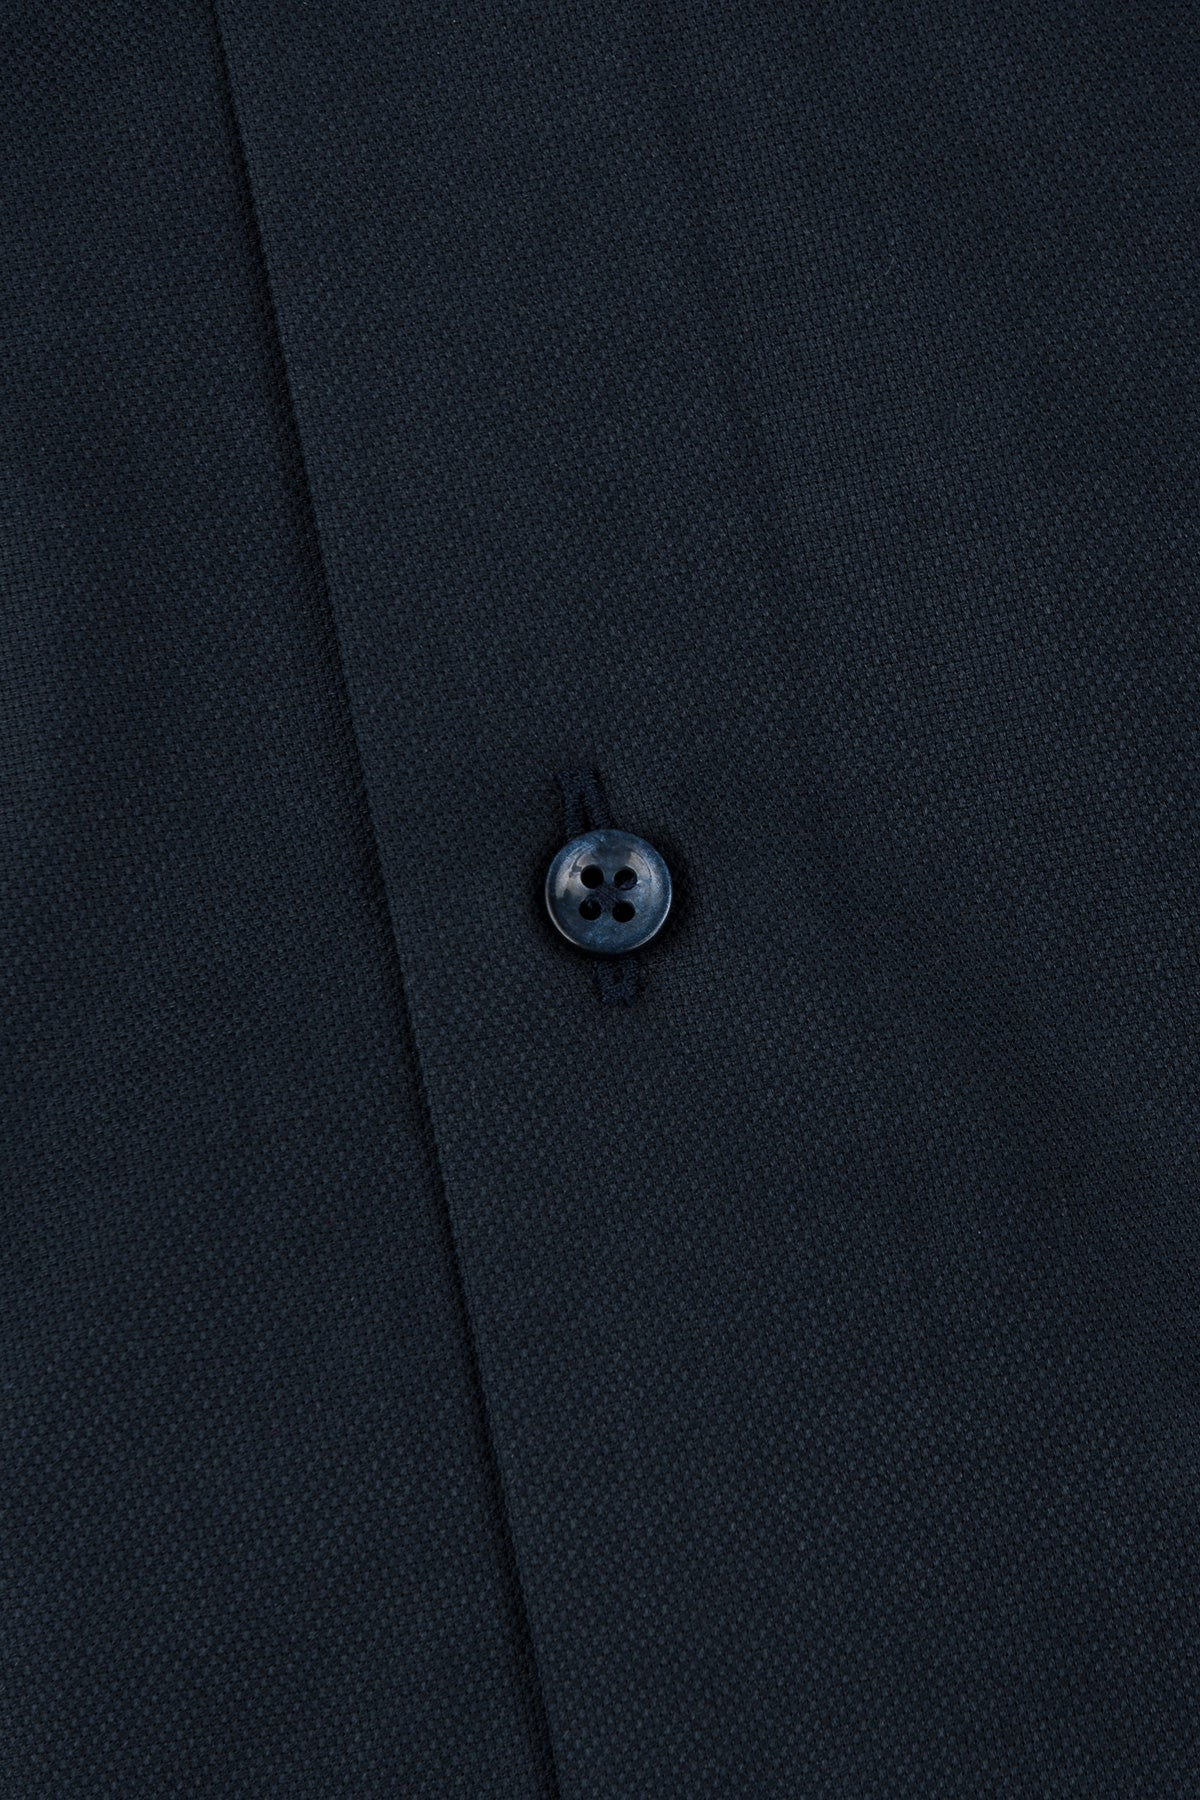 Dark blue short sleeve regular fit shirt with contrast details